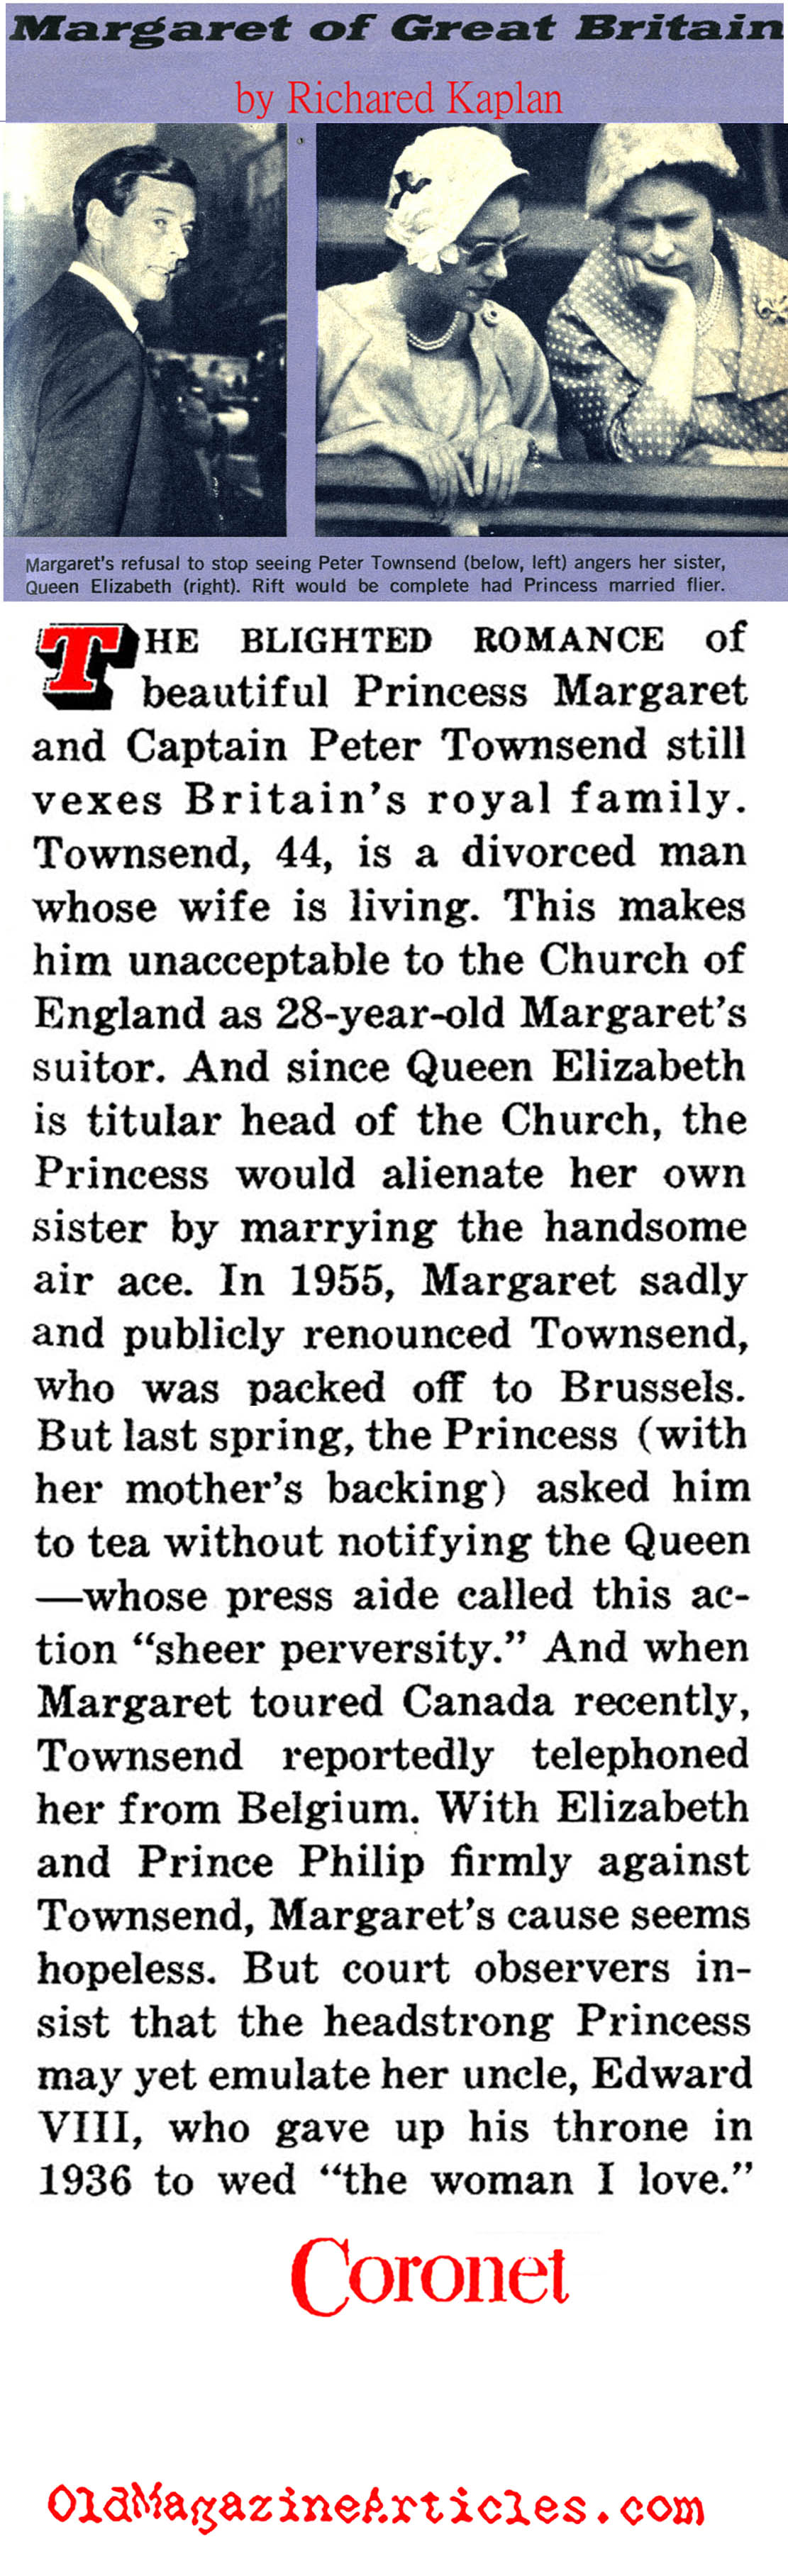 Princess Margaret and Captain Townsend (Coronet Magazine, 1958)